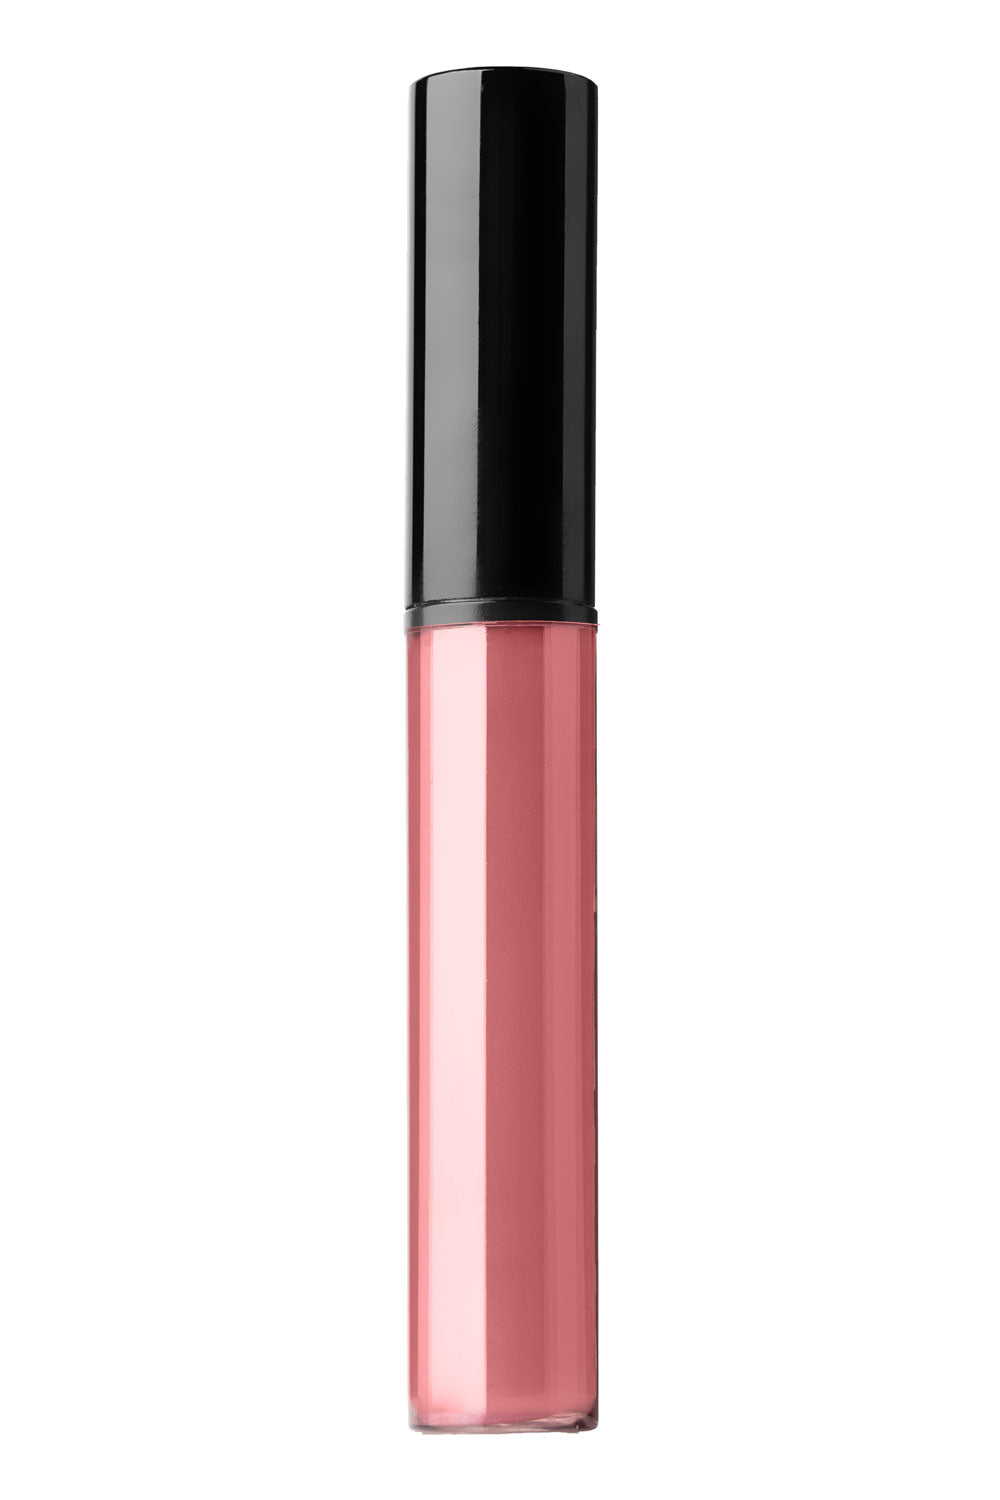 Allure - Type 2 Lip Gloss